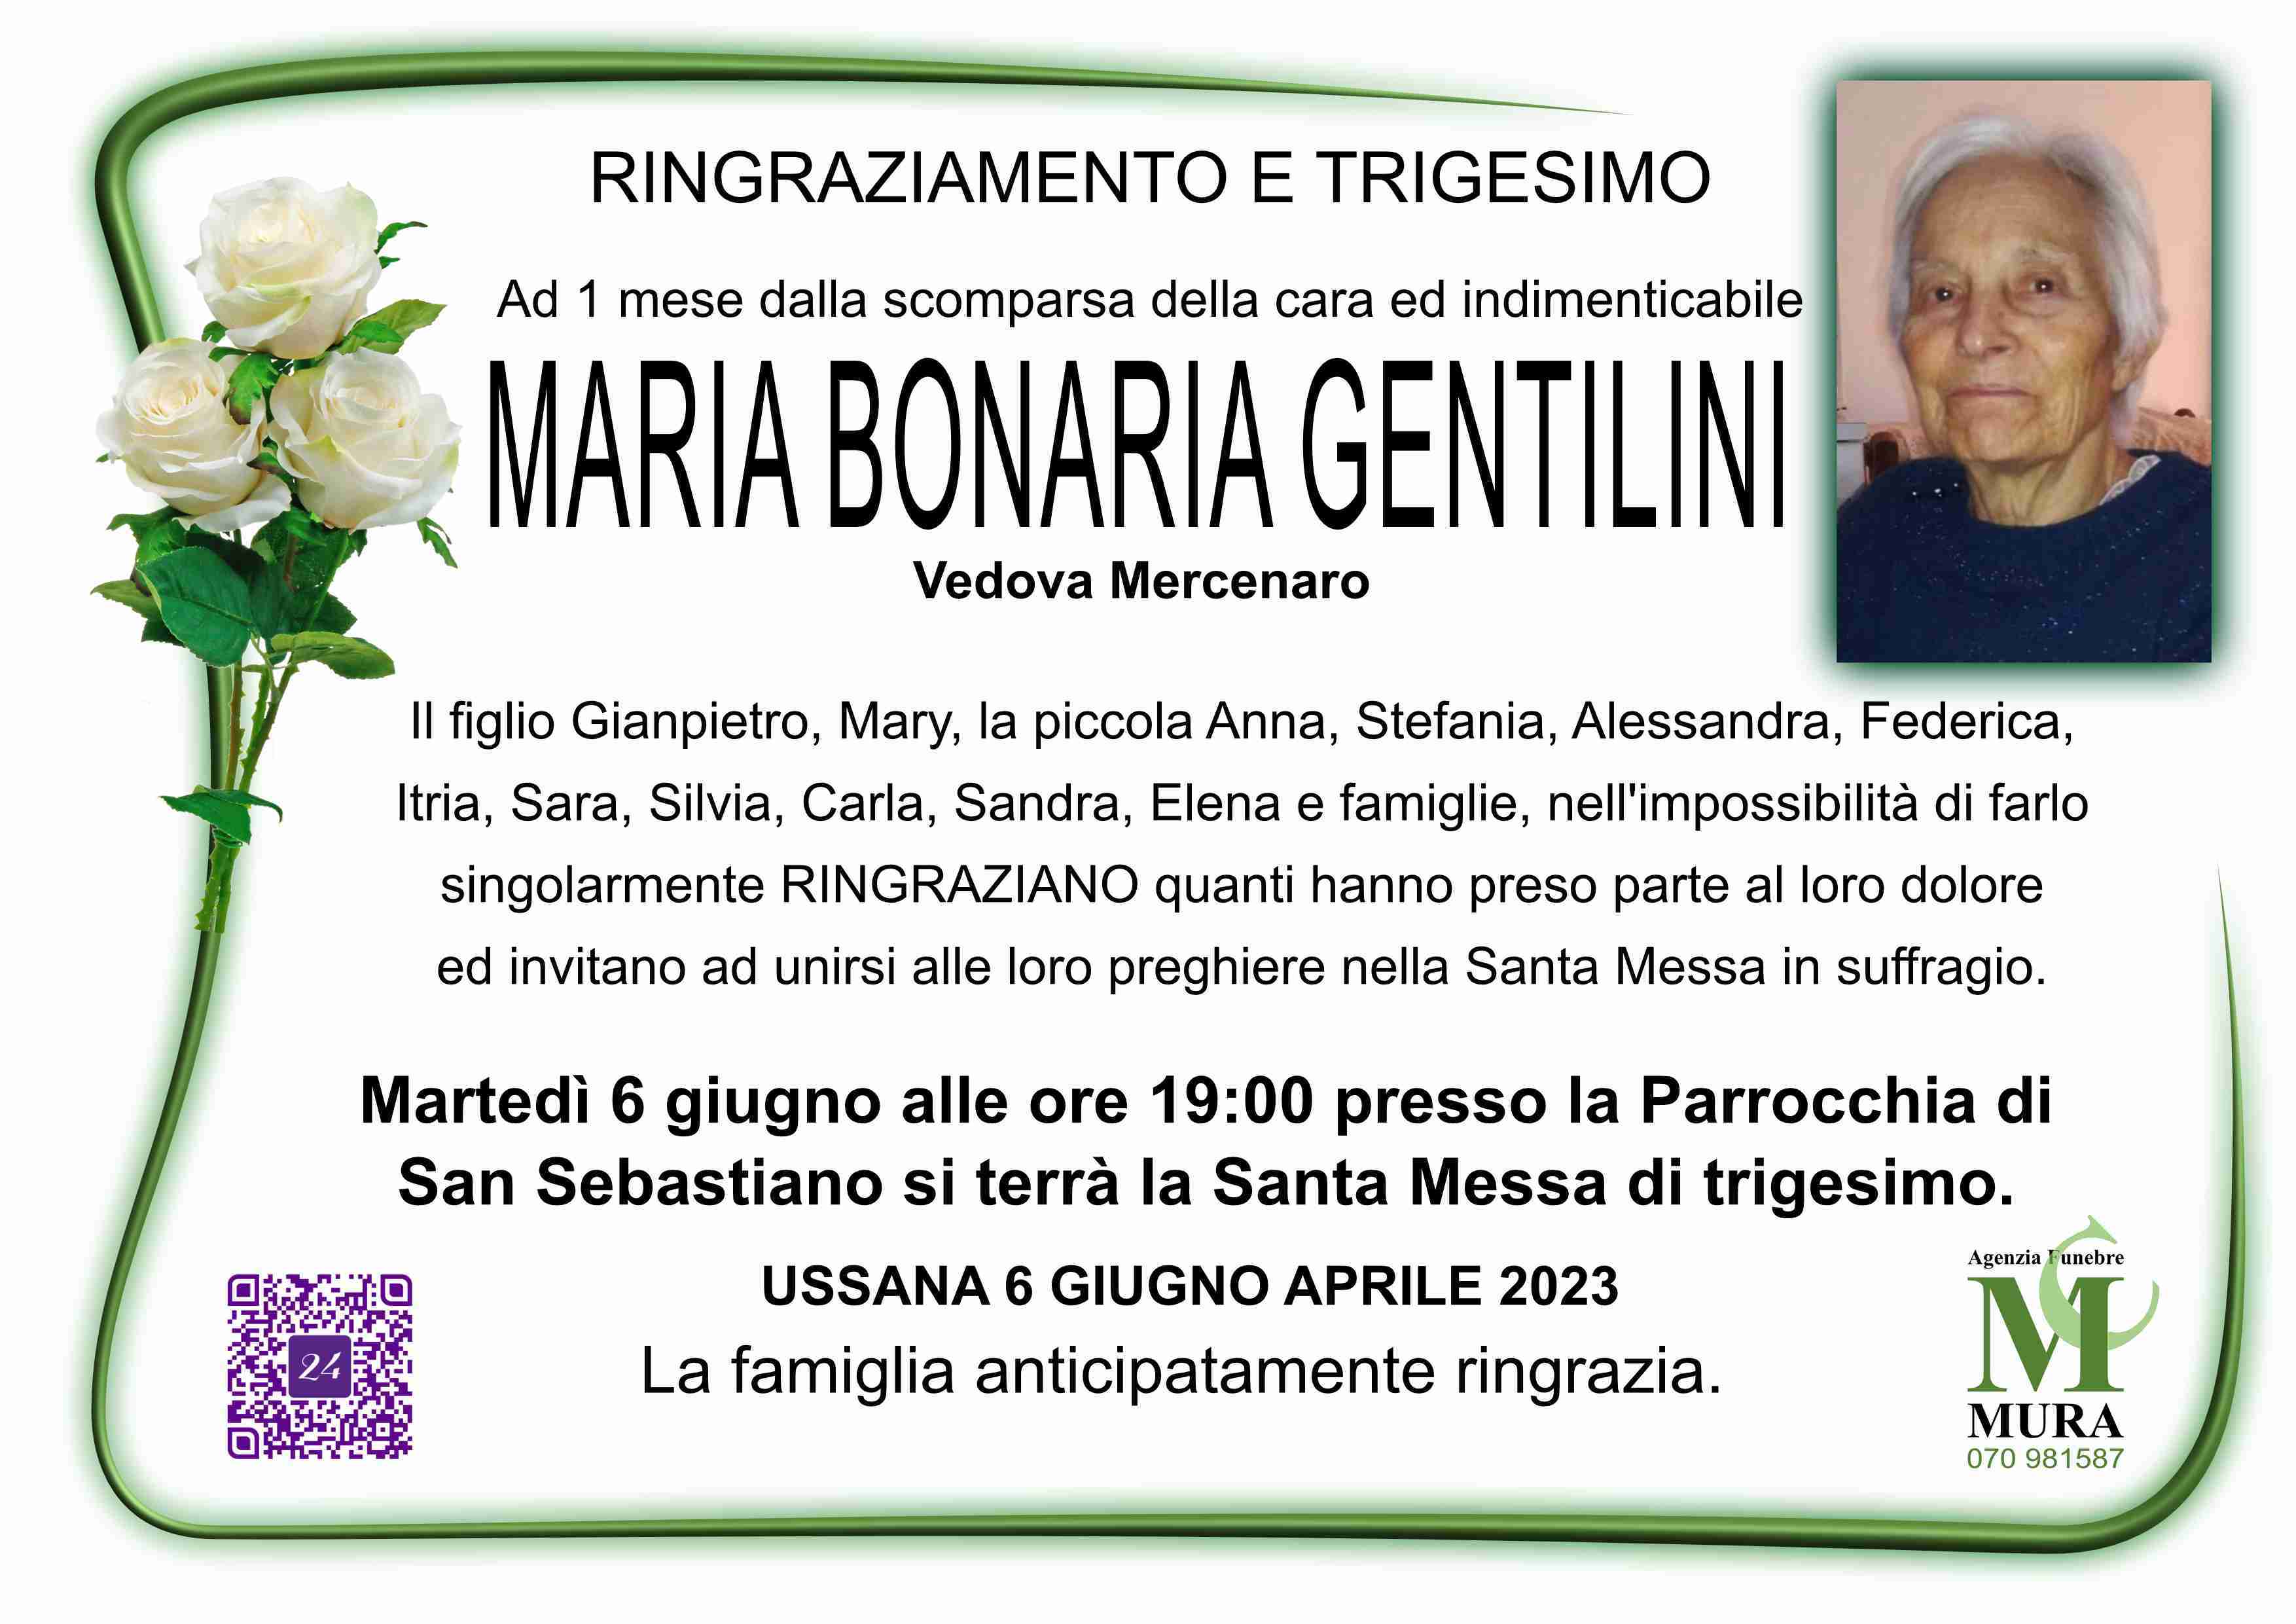 Maria Bonaria Gentilini